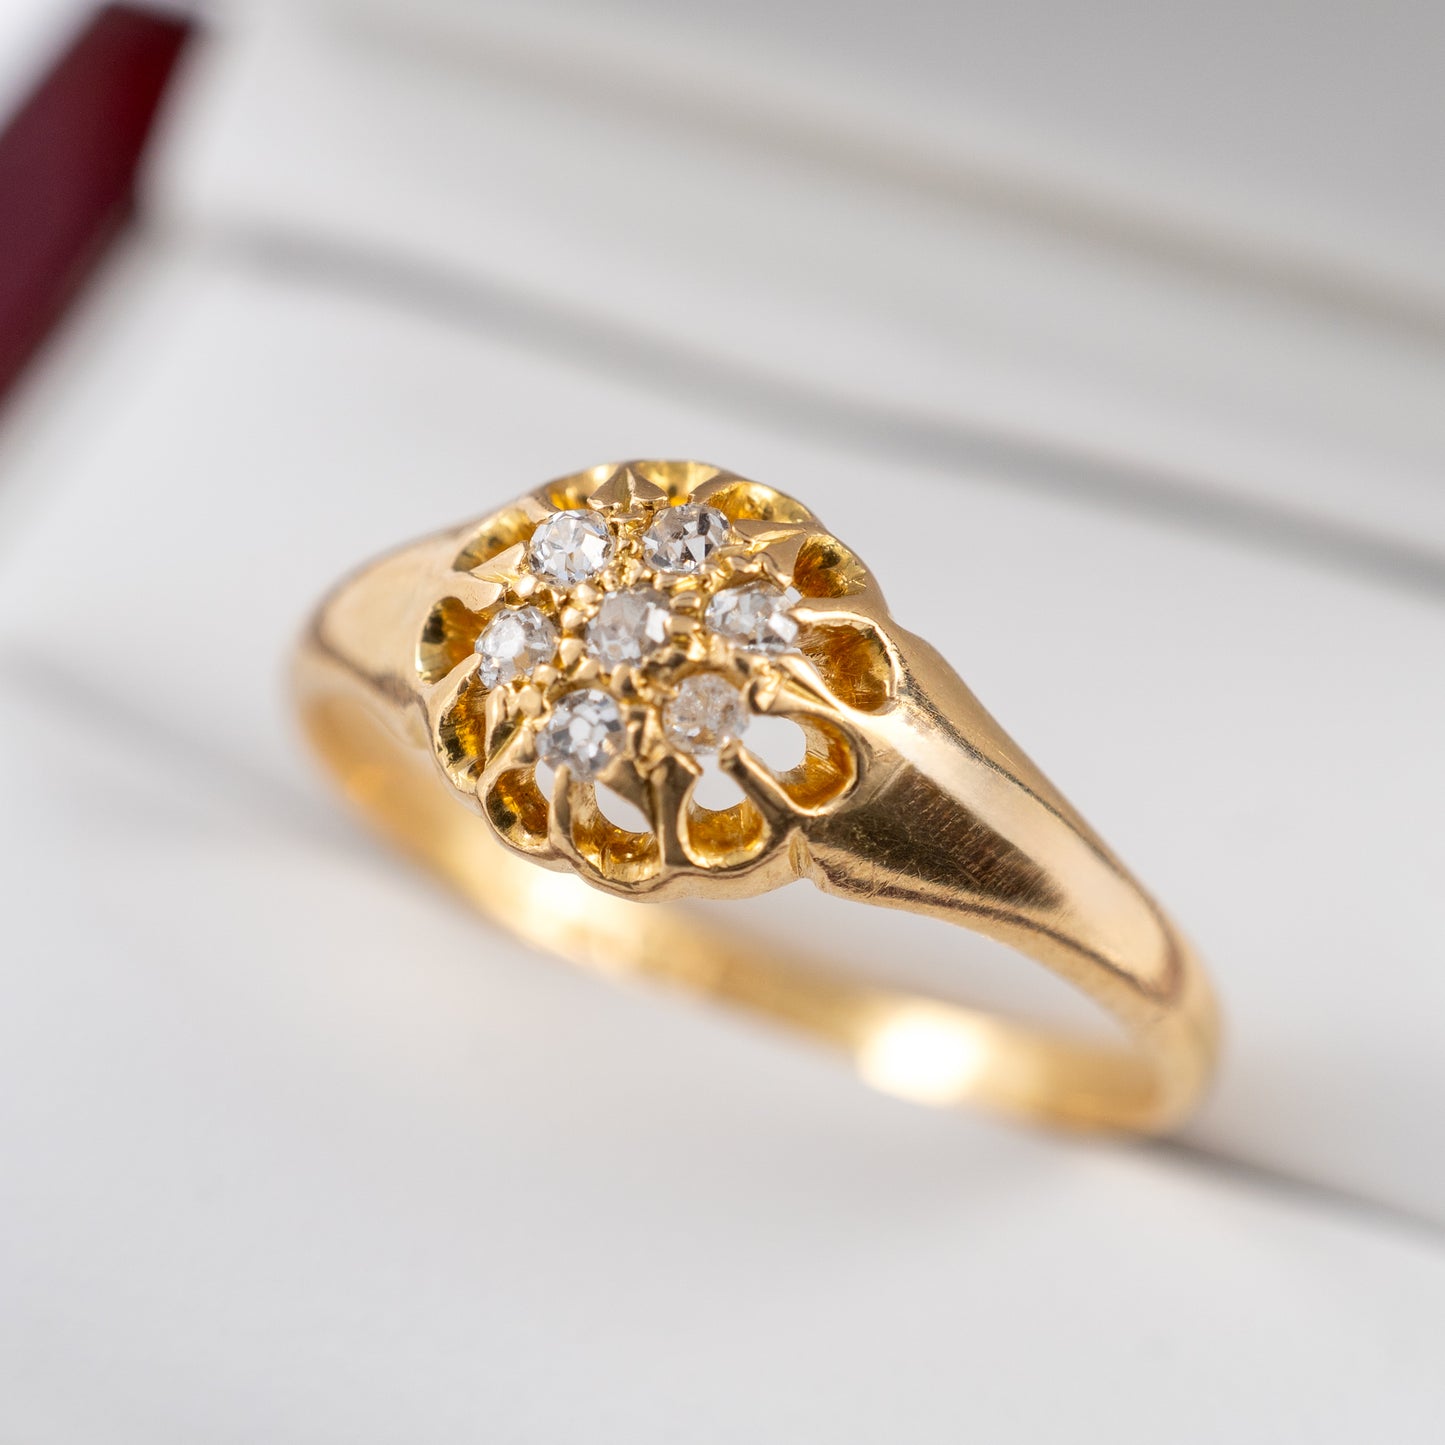 Antique 18ct Gold Diamond Cluster Ring